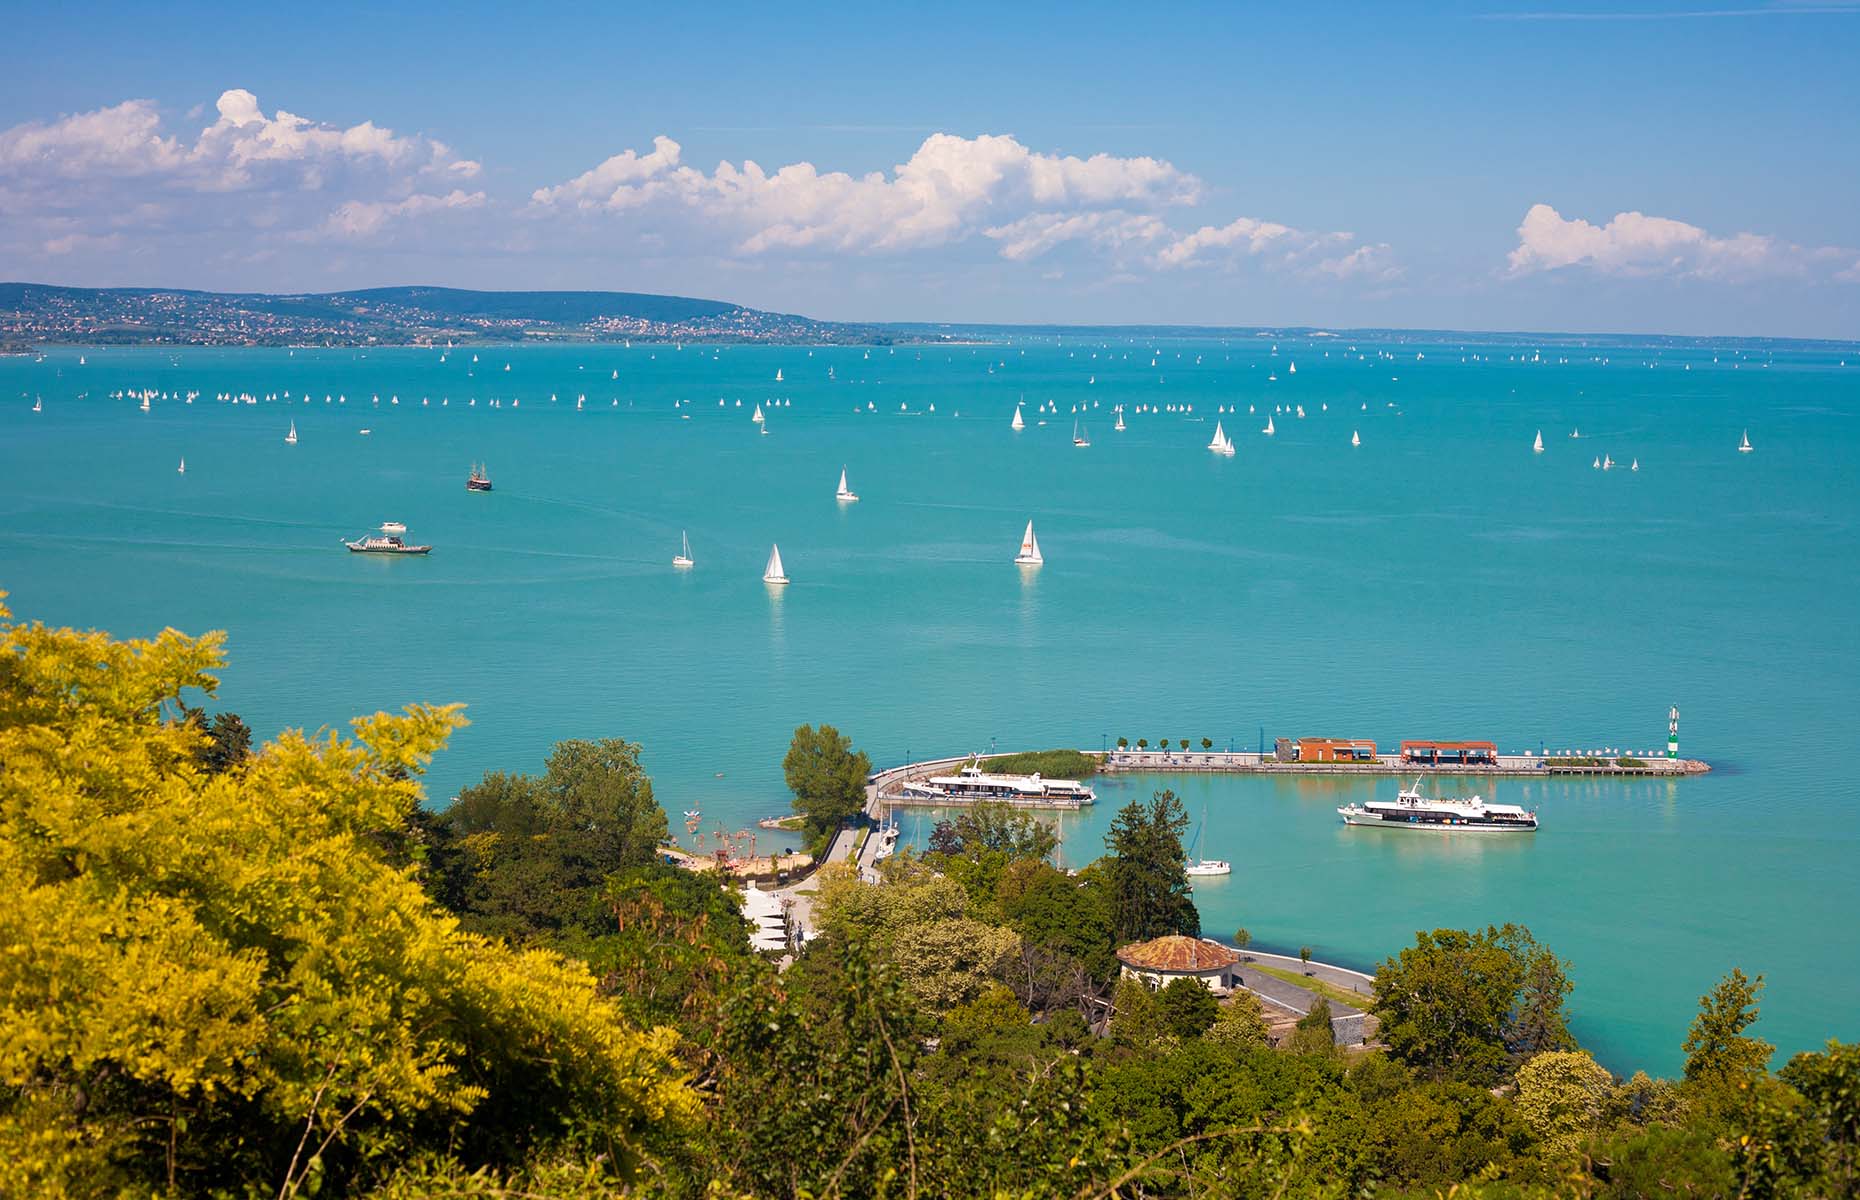 Lake Balaton, Hungary scenery (Image: andras_csontos/Shutterstock)